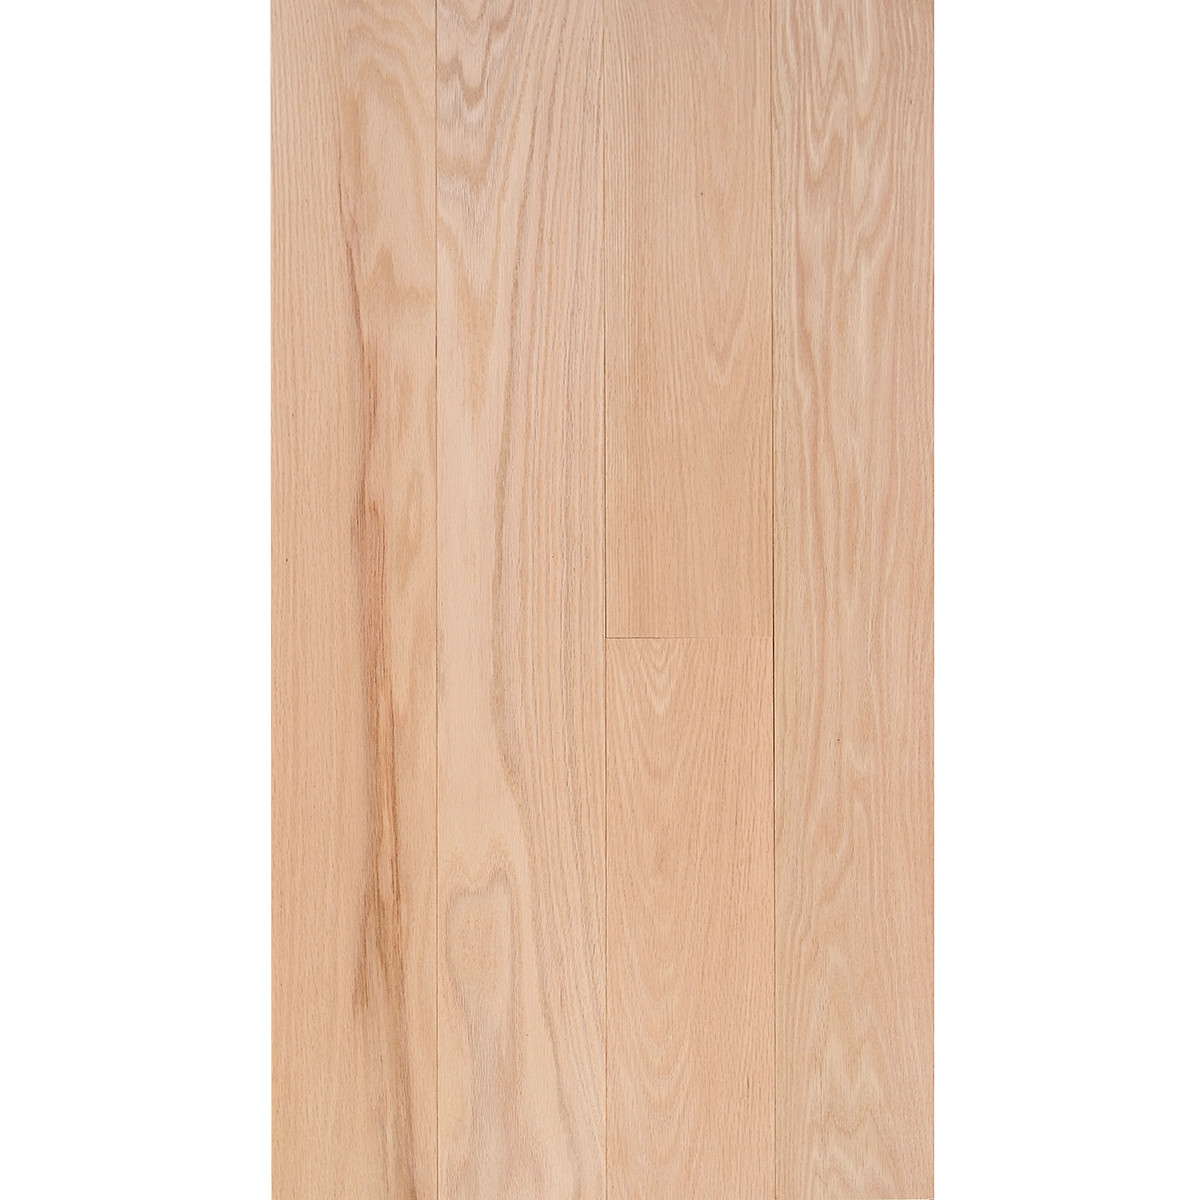 Unfinished White Oak Hardwood Flooring Prices Of Red Oak 3 4 X 5 Select Grade Flooring with Regard to Fs 5 Redoak Select Em Flooring